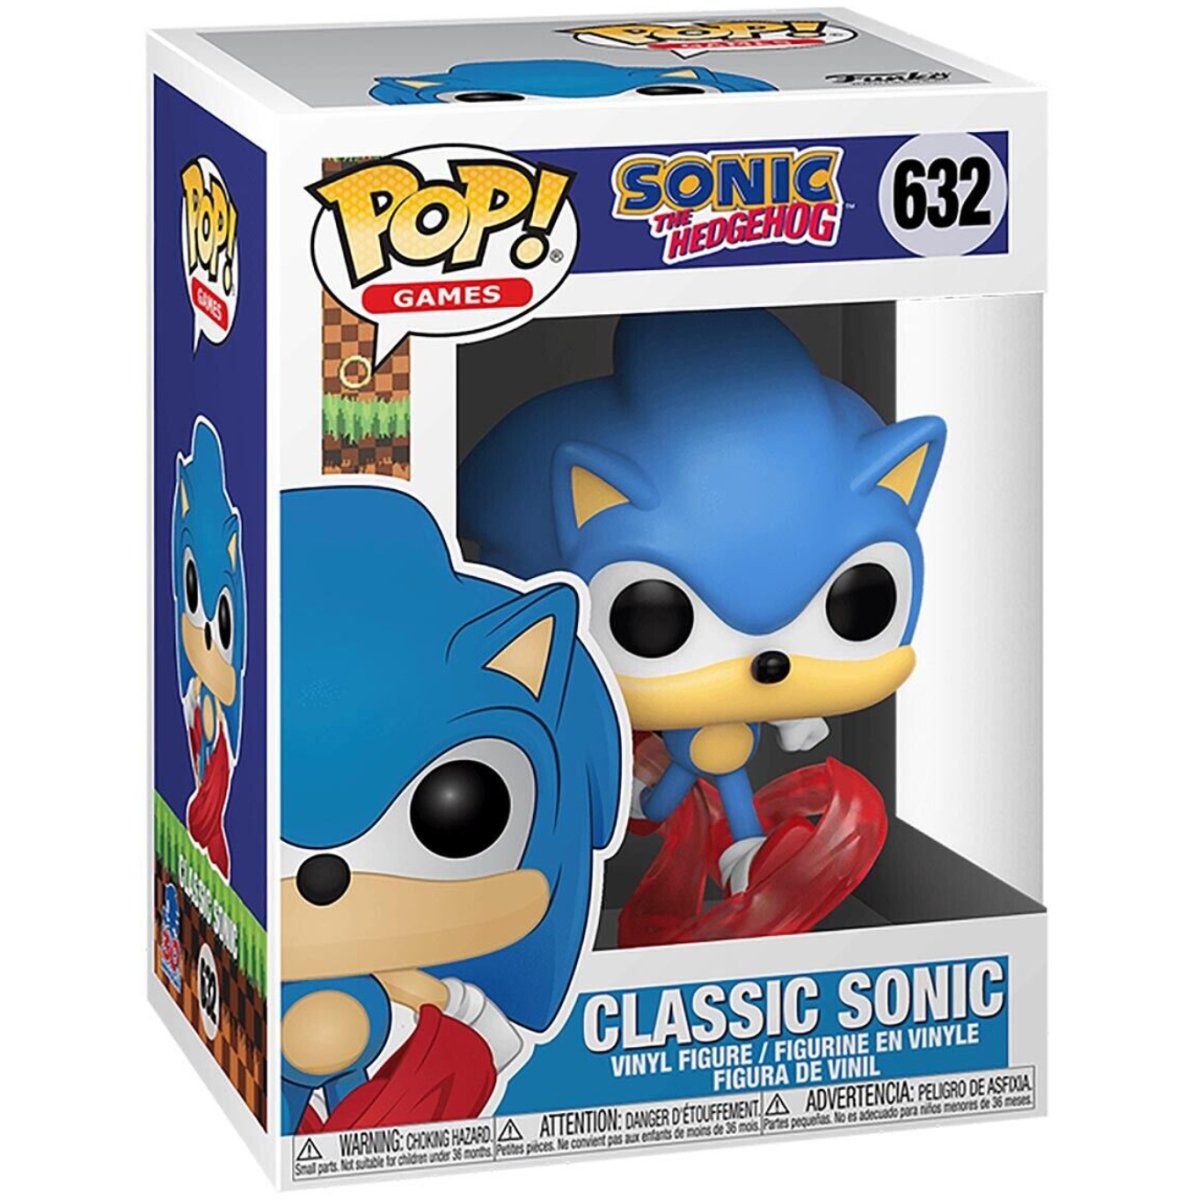 Sonic the Hedgehog - Classic Sonic #632 - Funko Pop! Vinyl Games - Persona Toys